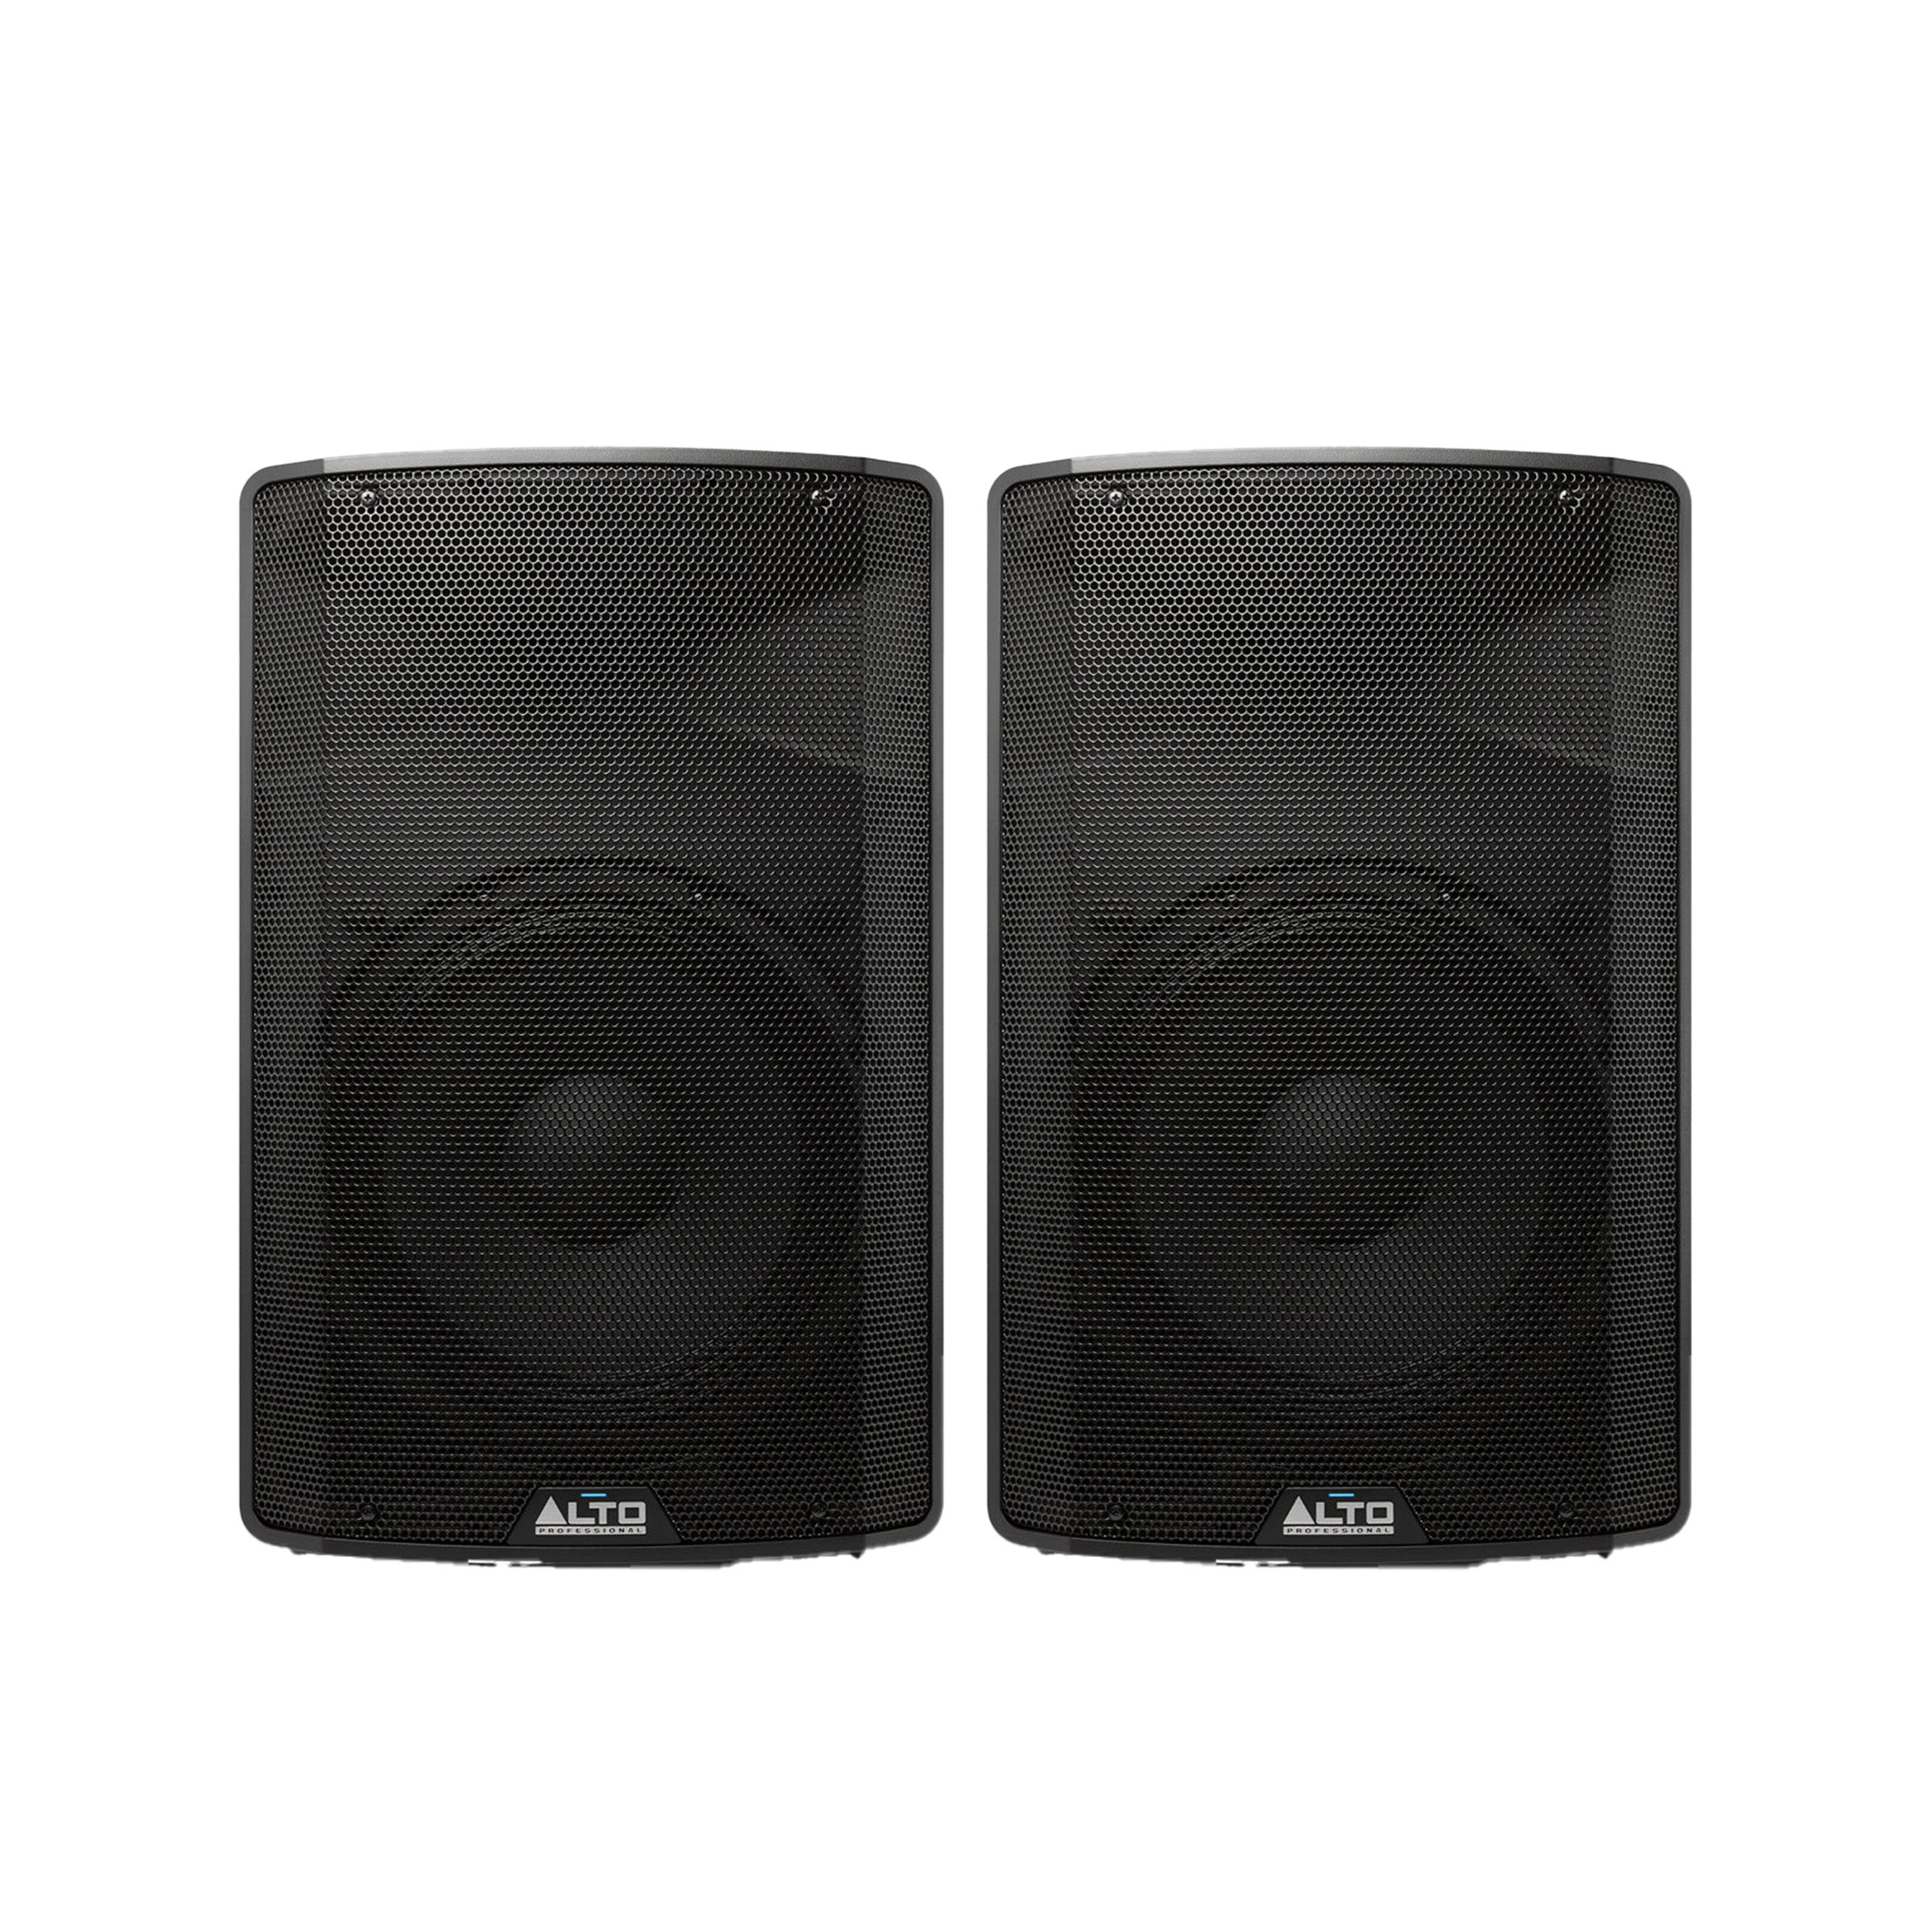 Alto TX312 750W Active PA Speaker (Pair)